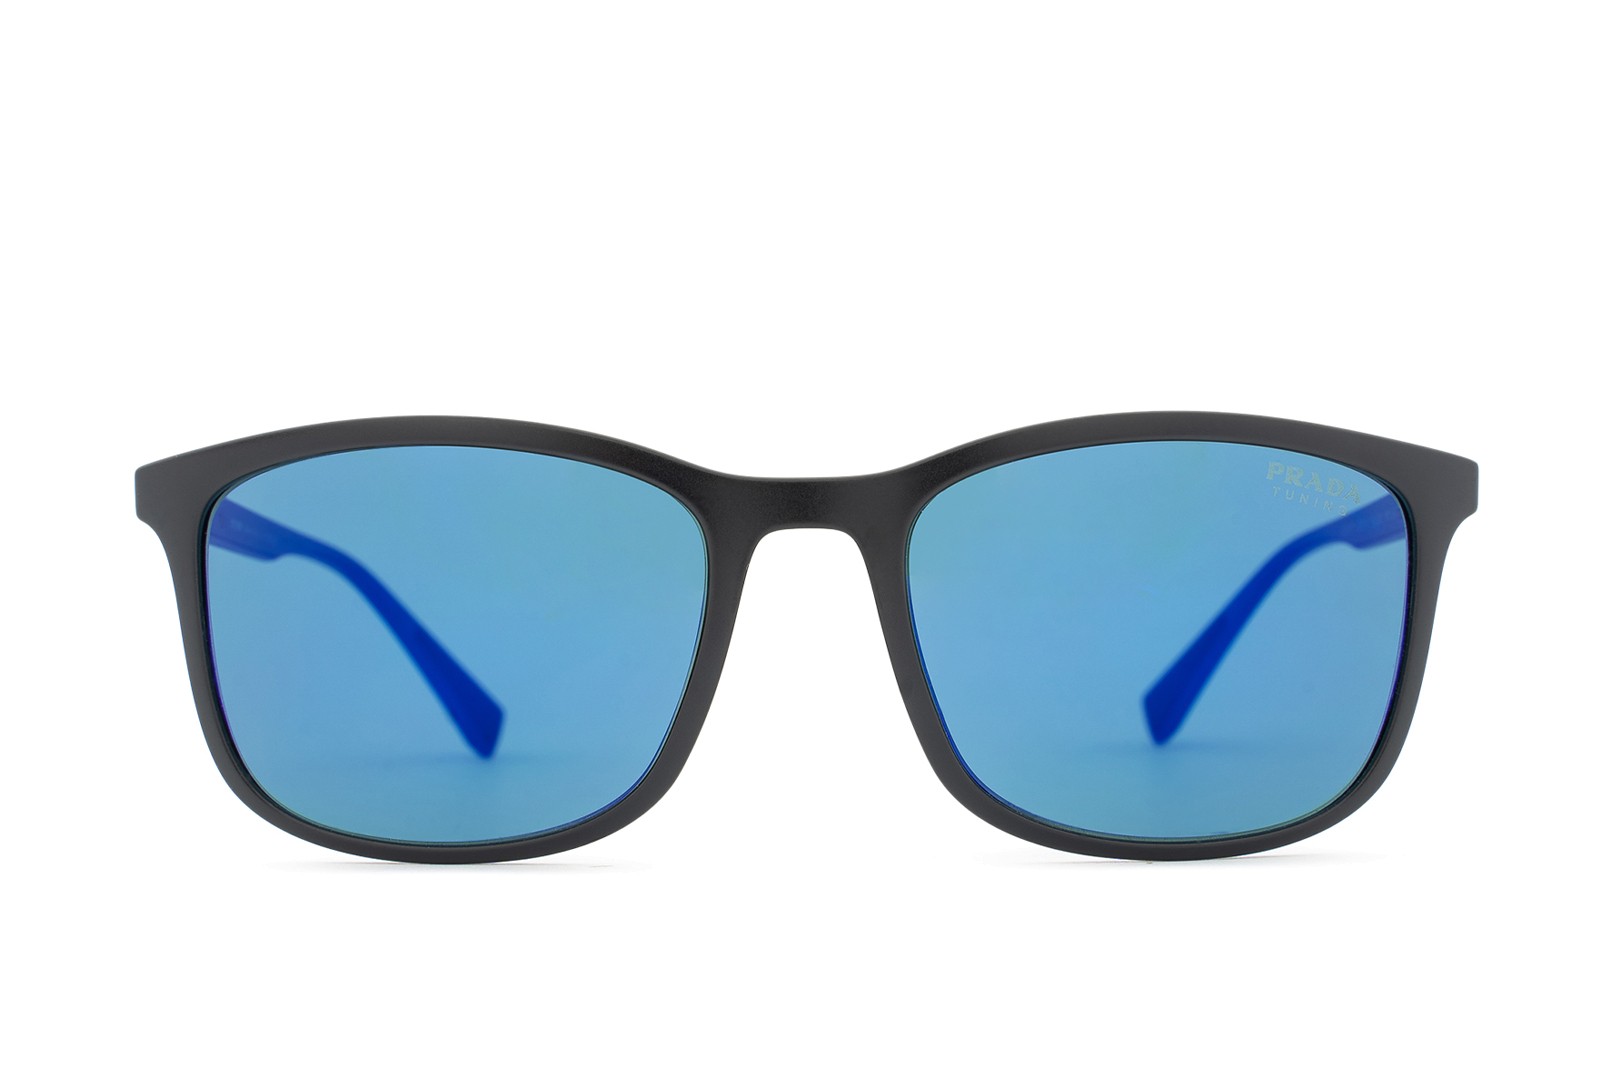 Prada Prescription Glasses PR18WV Blue Crystal/Clear Glasses | Prada glasses,  Lens and frames, Optical eyewear